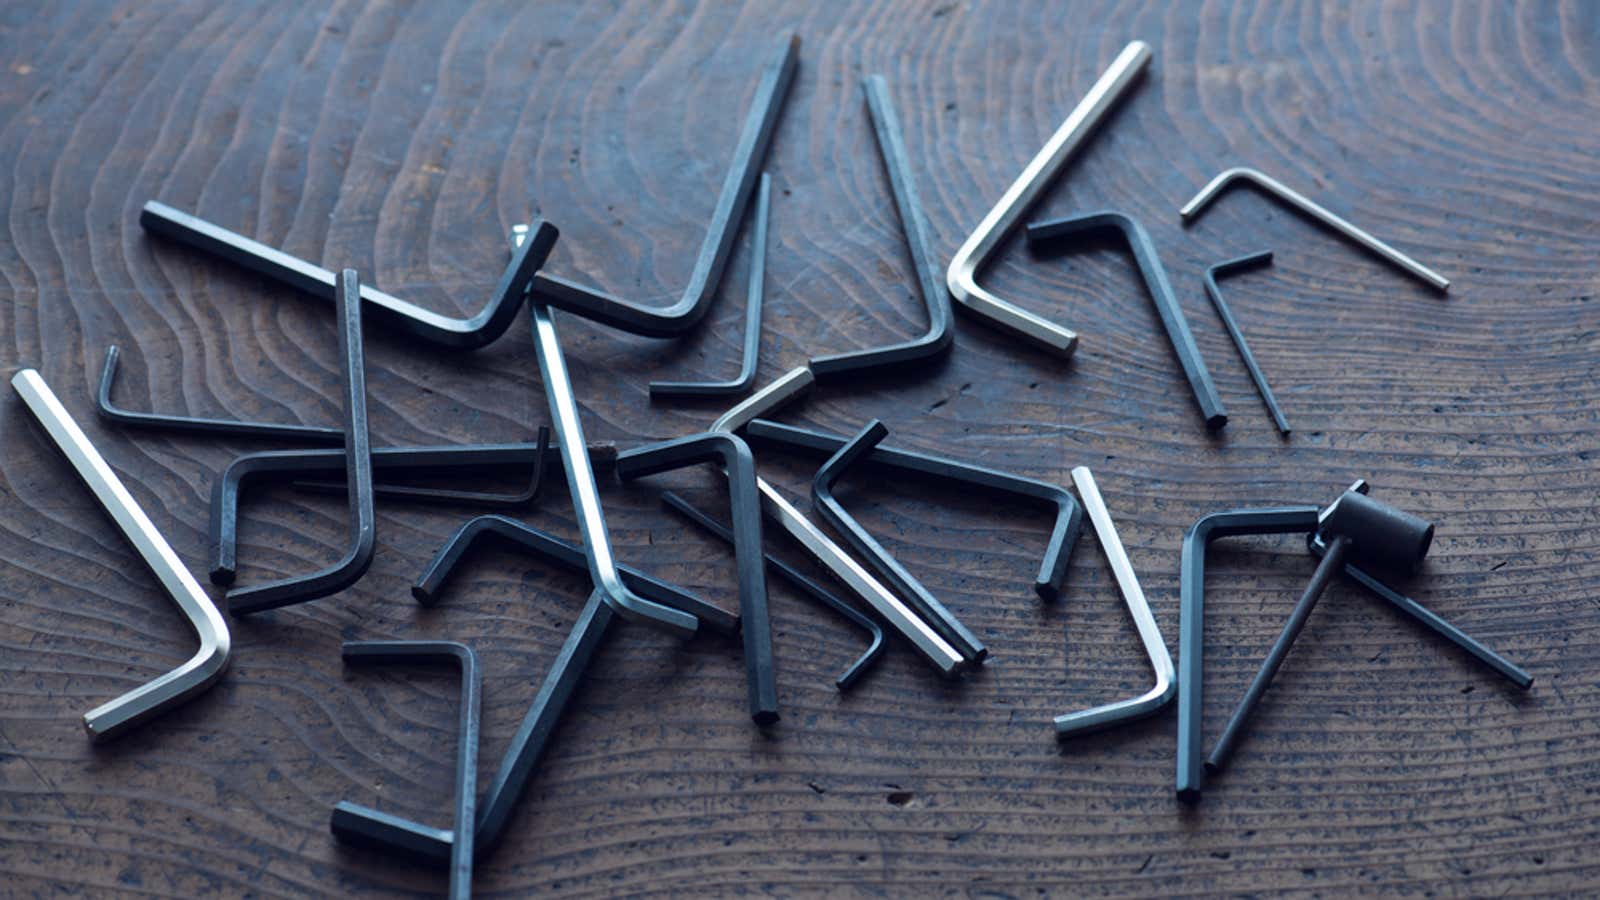 Allen wrenches: Keys to safer screws